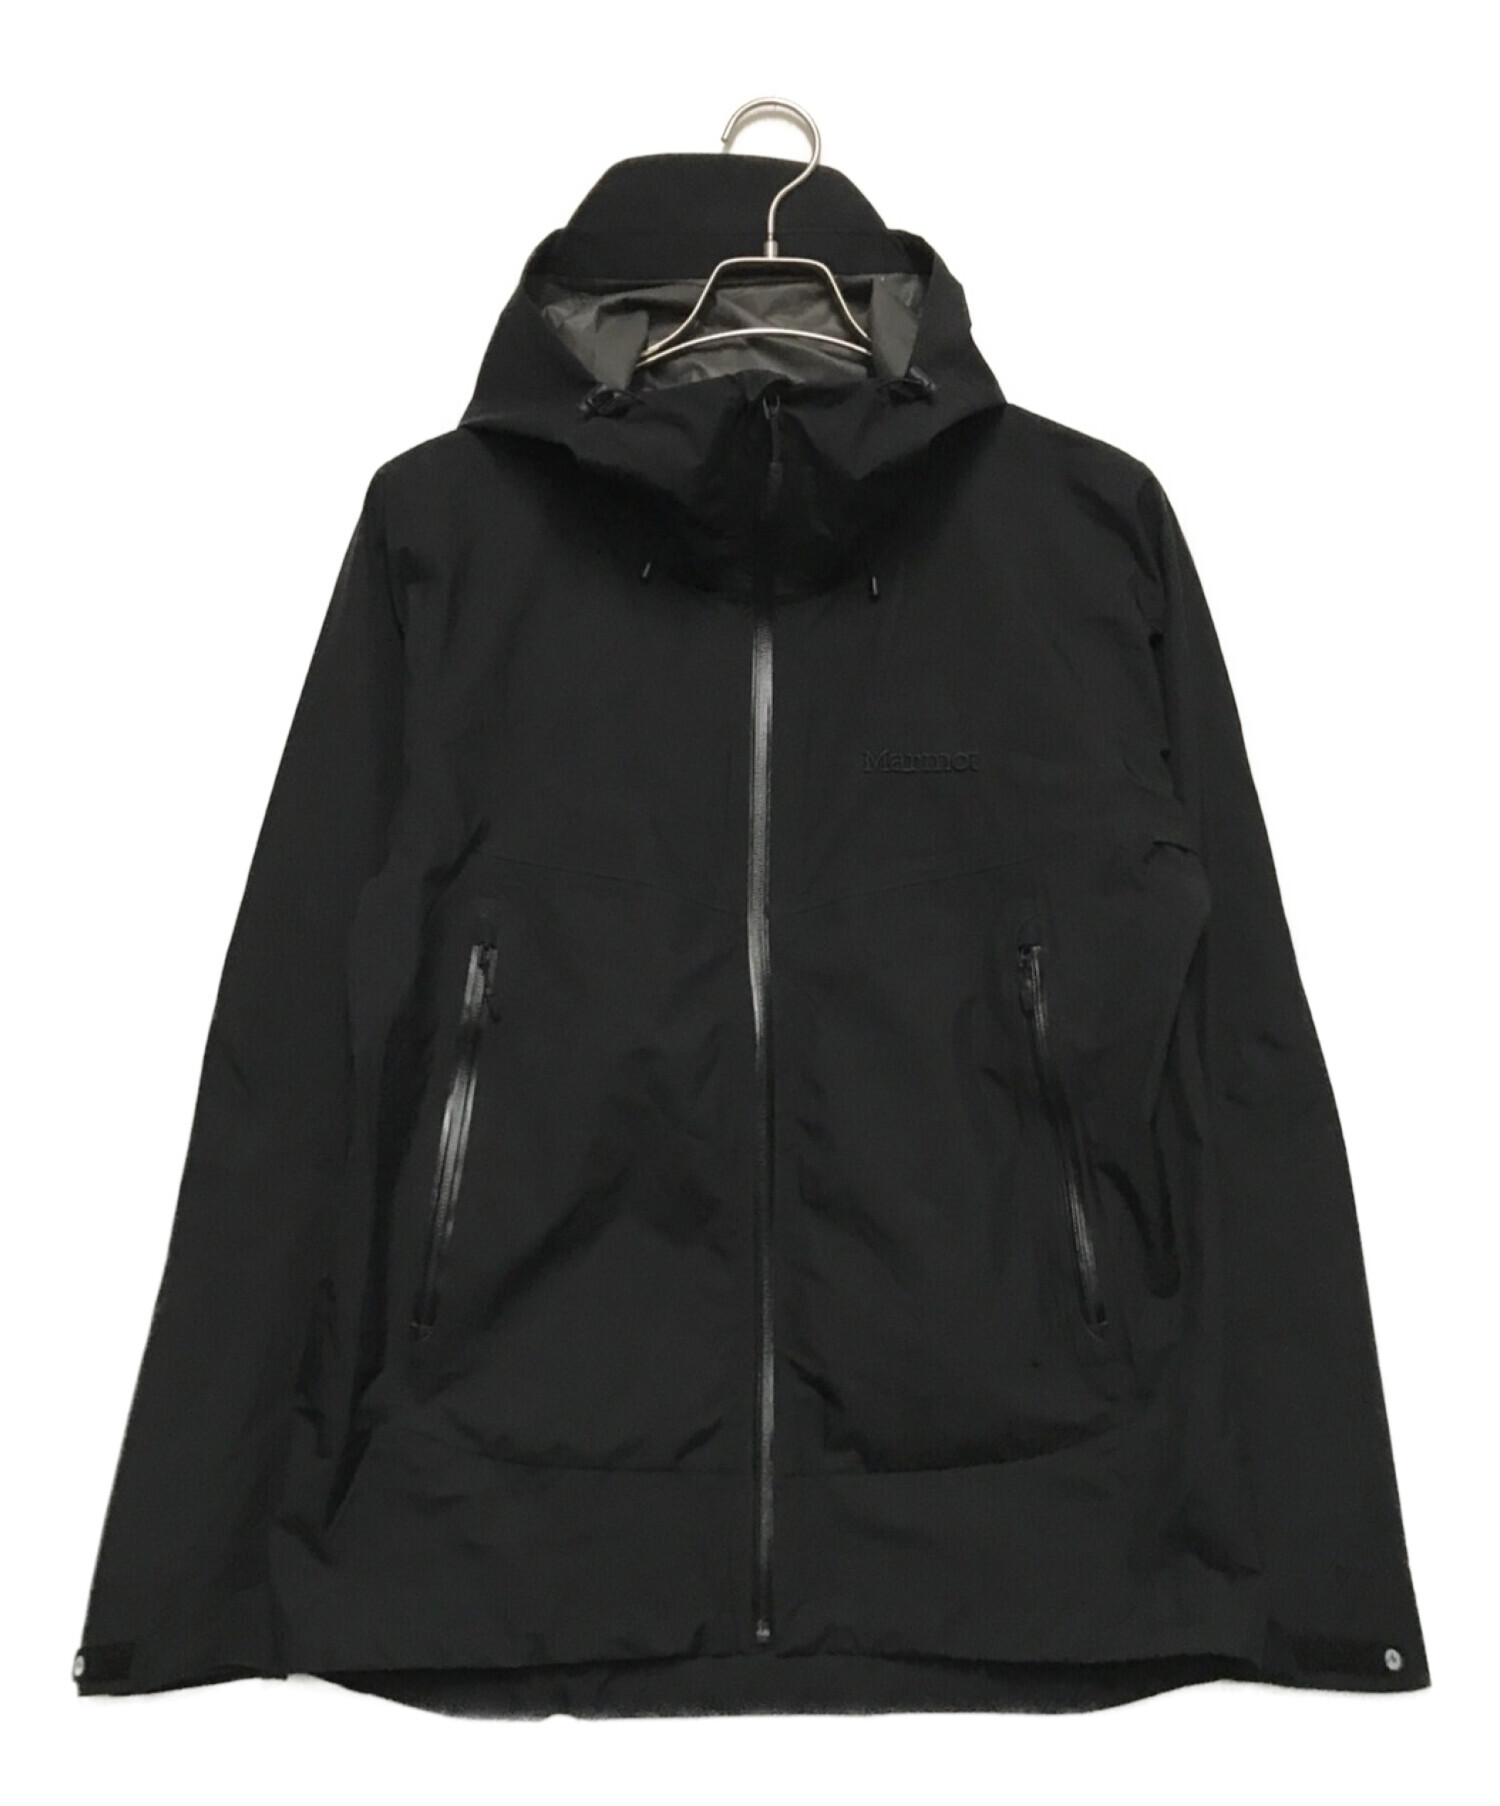 MARMOT (マーモット) COMODO jacket ブラック サイズ:M